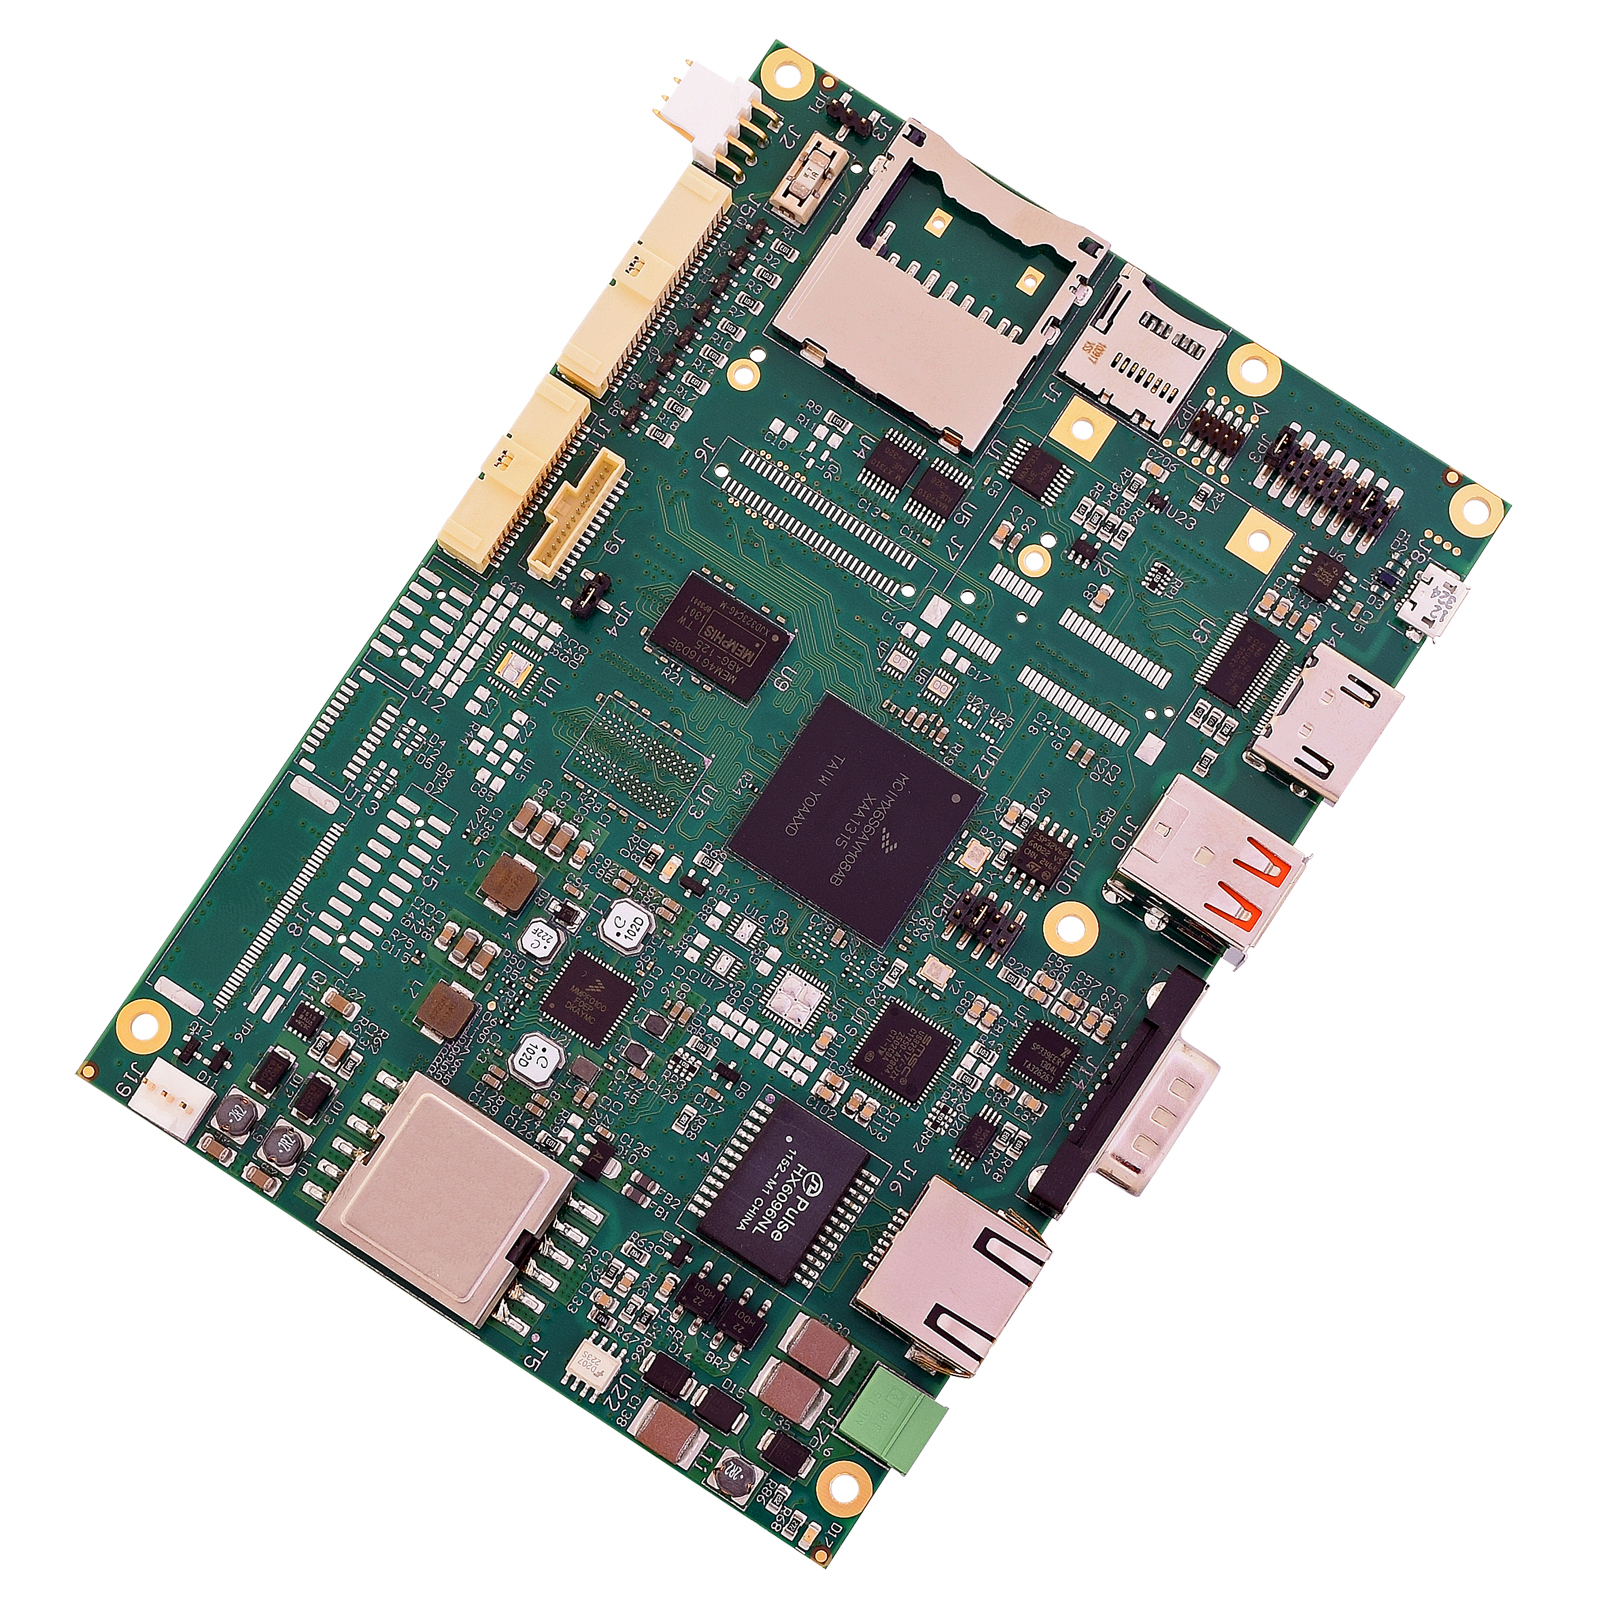 Empirisch Metropolitan Genre Industrial SBC ARM - Single Core i.mx 6s A9 - WinSystems